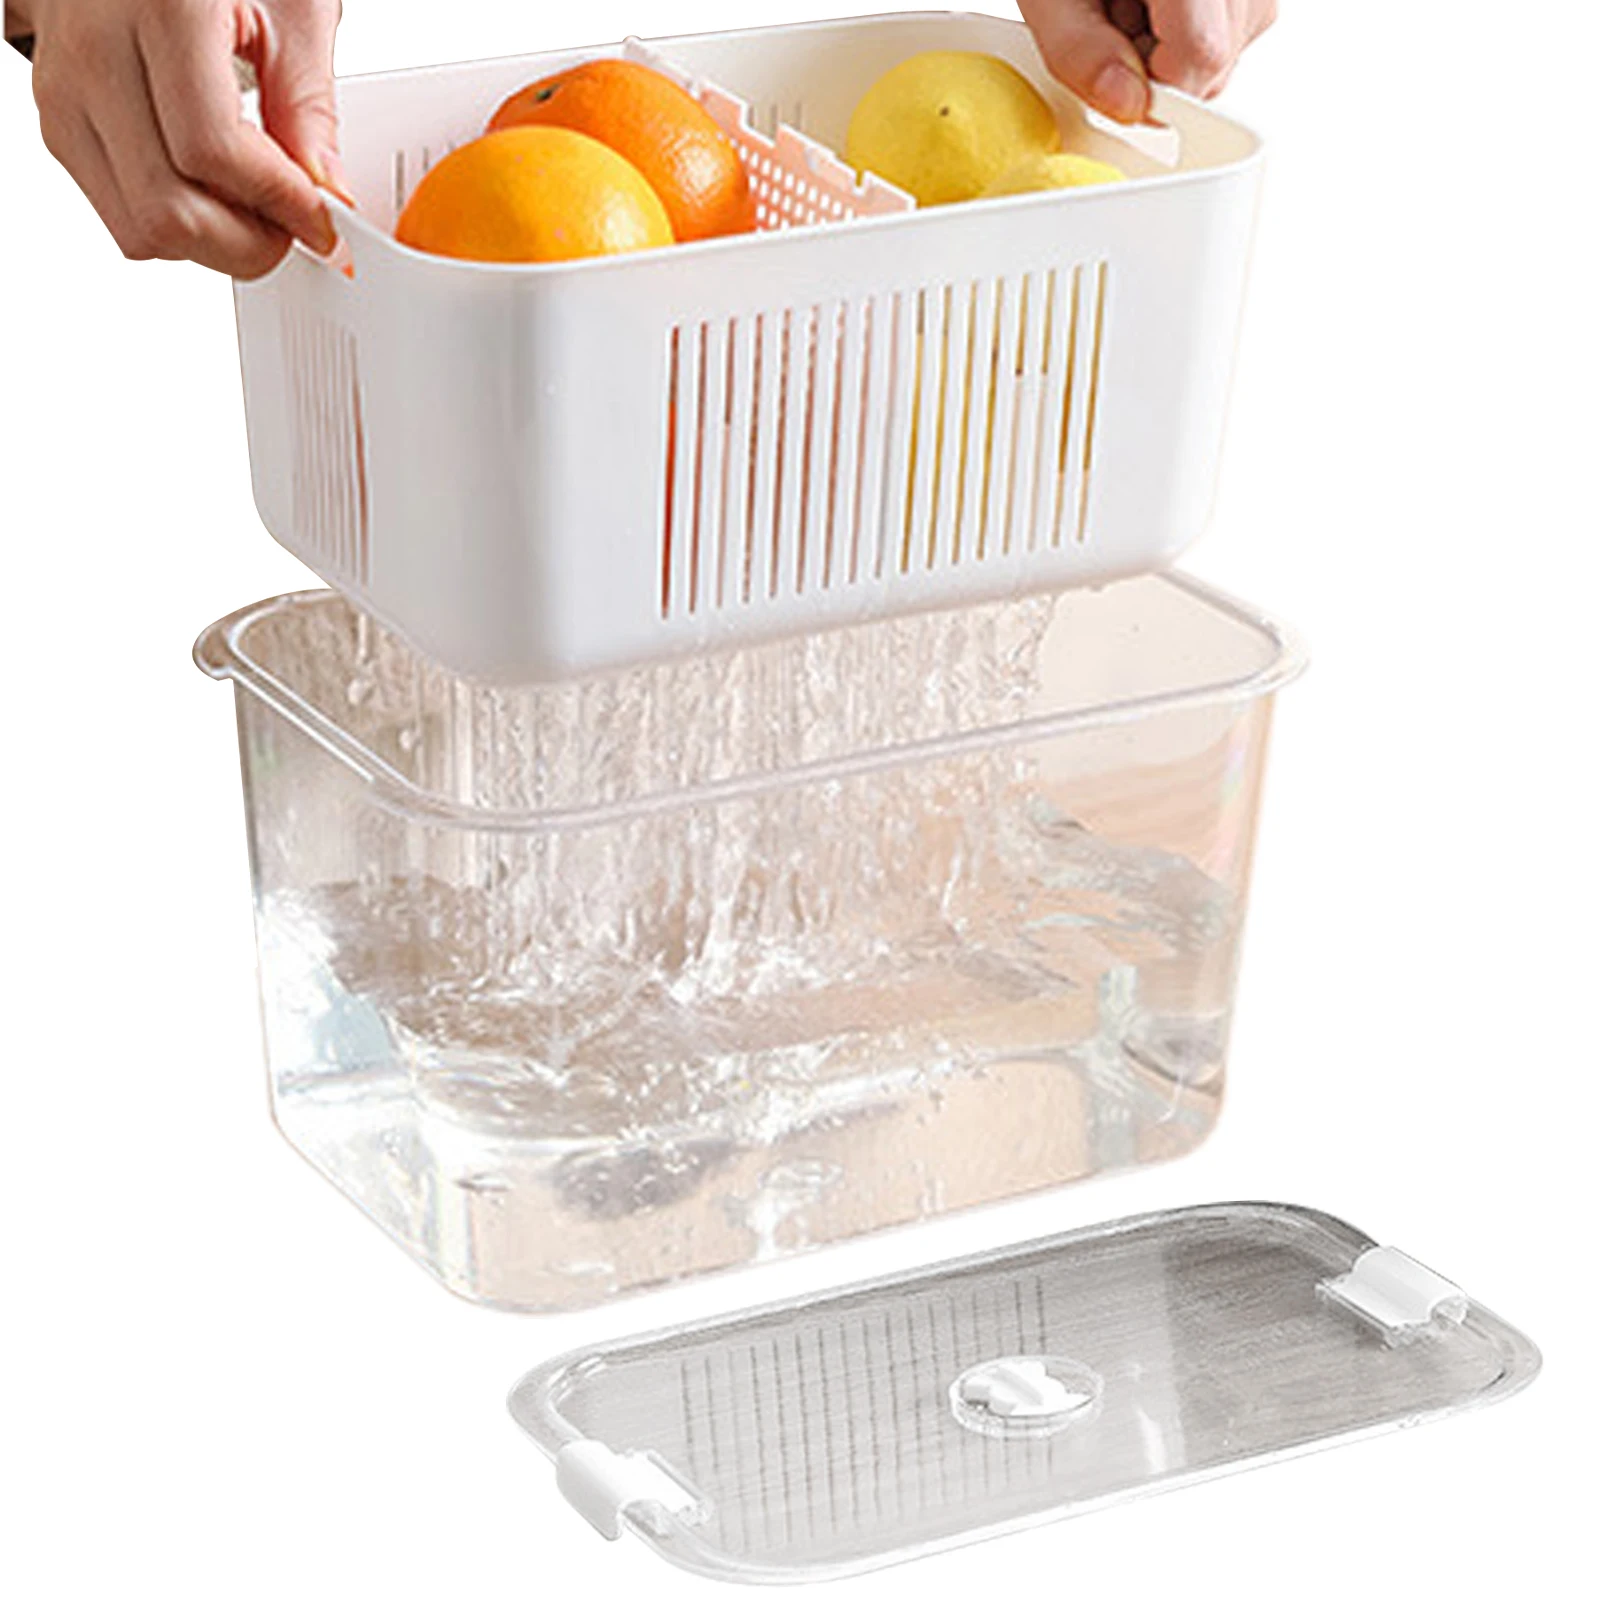 

Stackable Refrigerator Organizer Bins Fridge Refrigerator Organizer Bins For Vegetable & Fruit Freezer Organization Divided